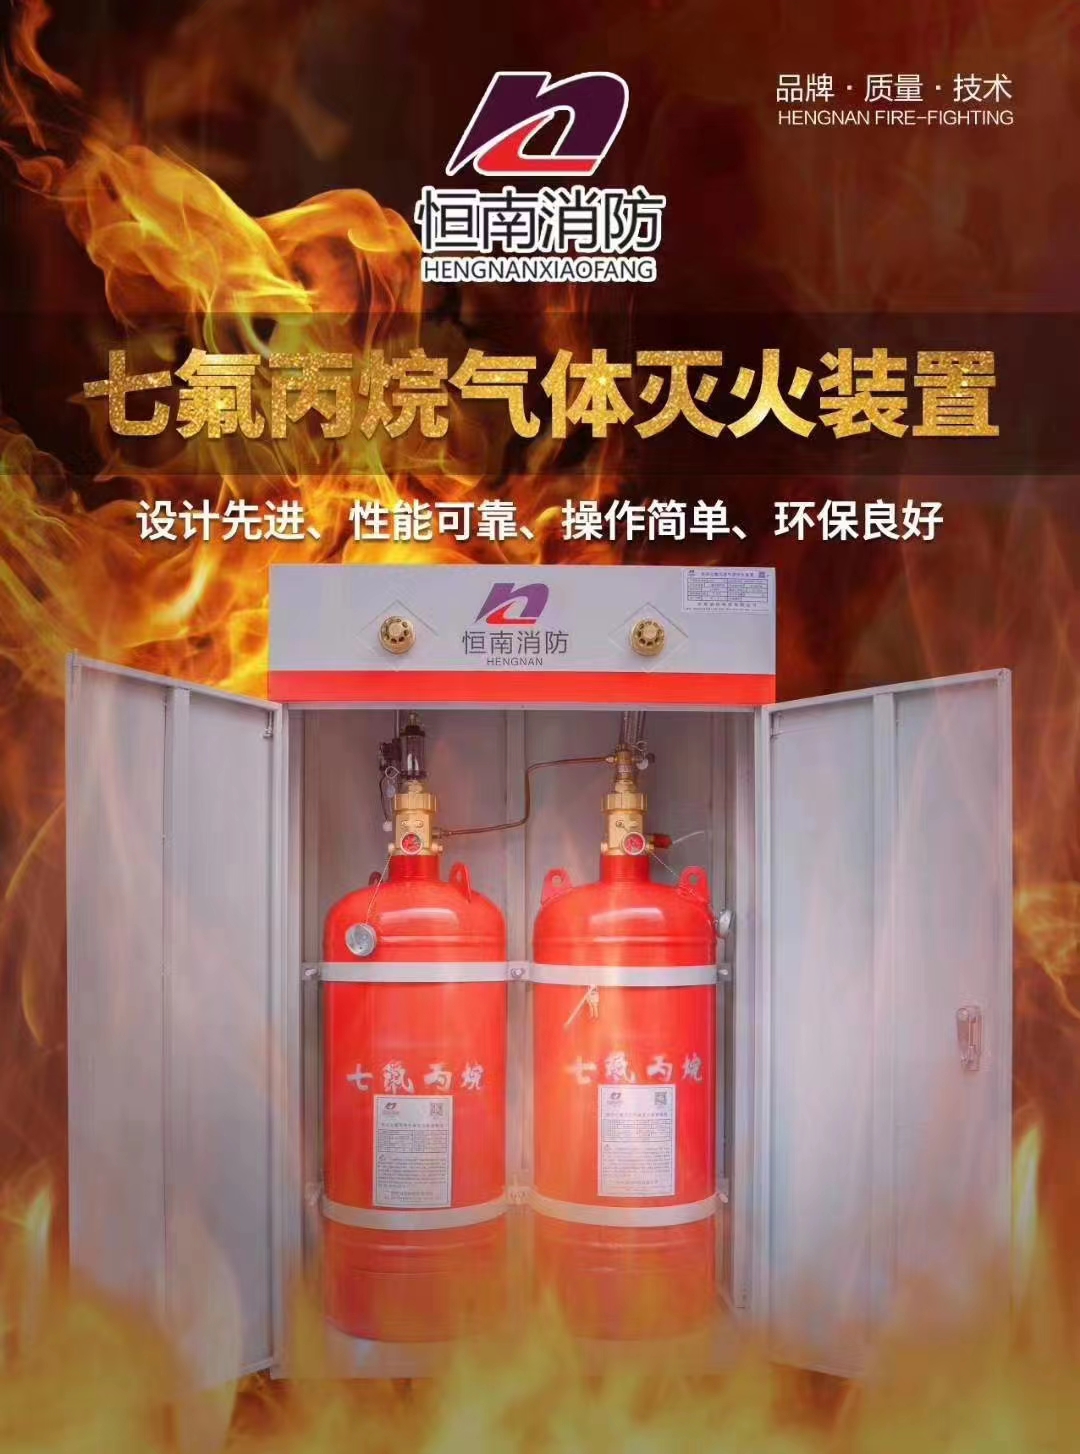 Cabinet hfc-227ea gas extinguishing device